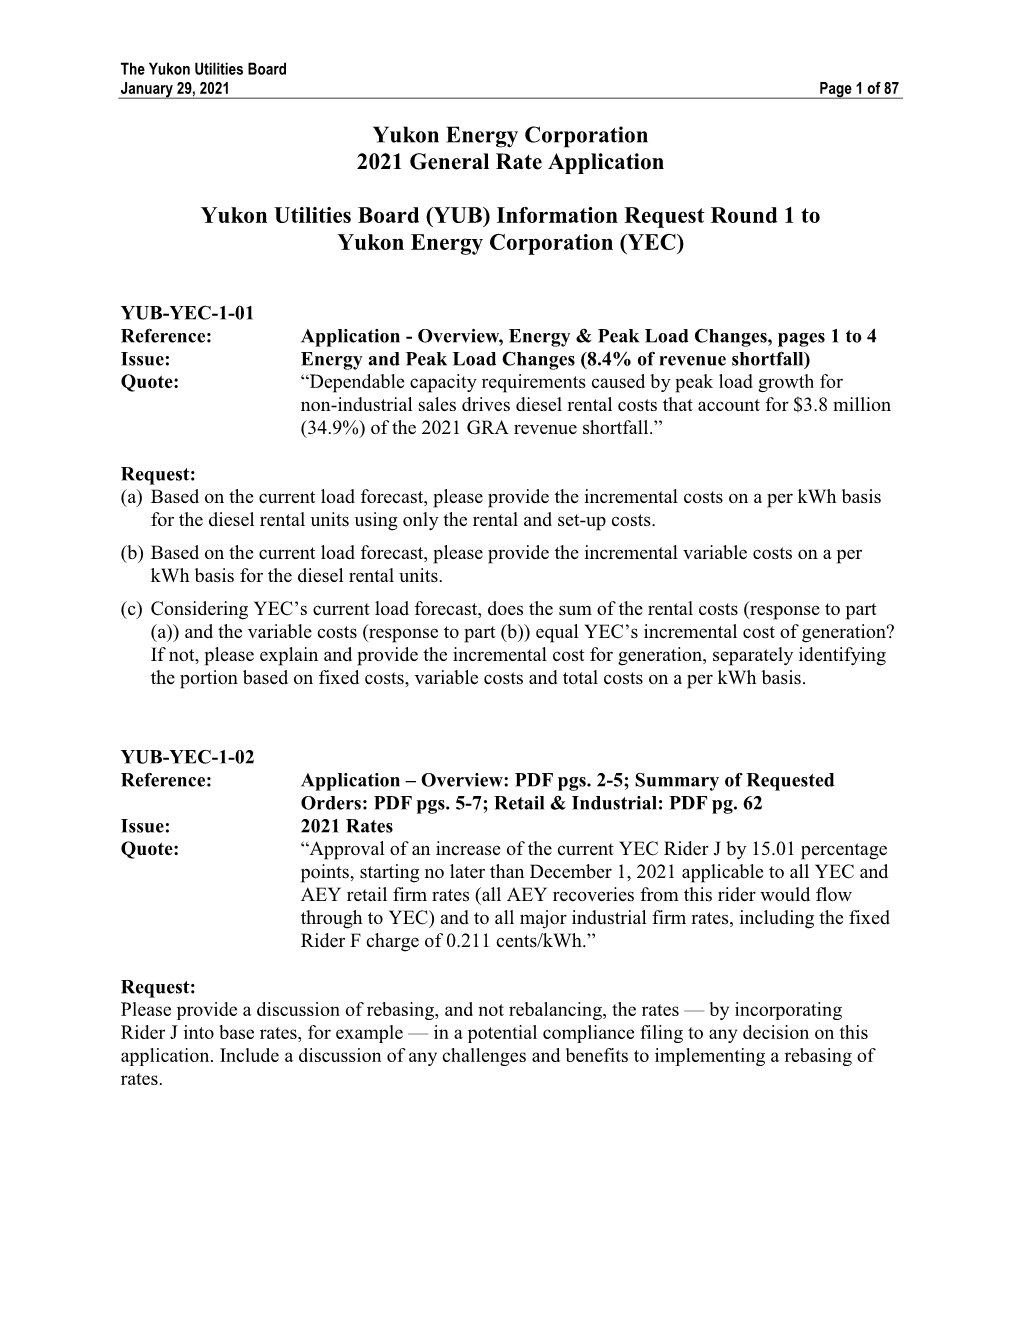 Yukon Energy Corporation 2021 General Rate Application Yukon